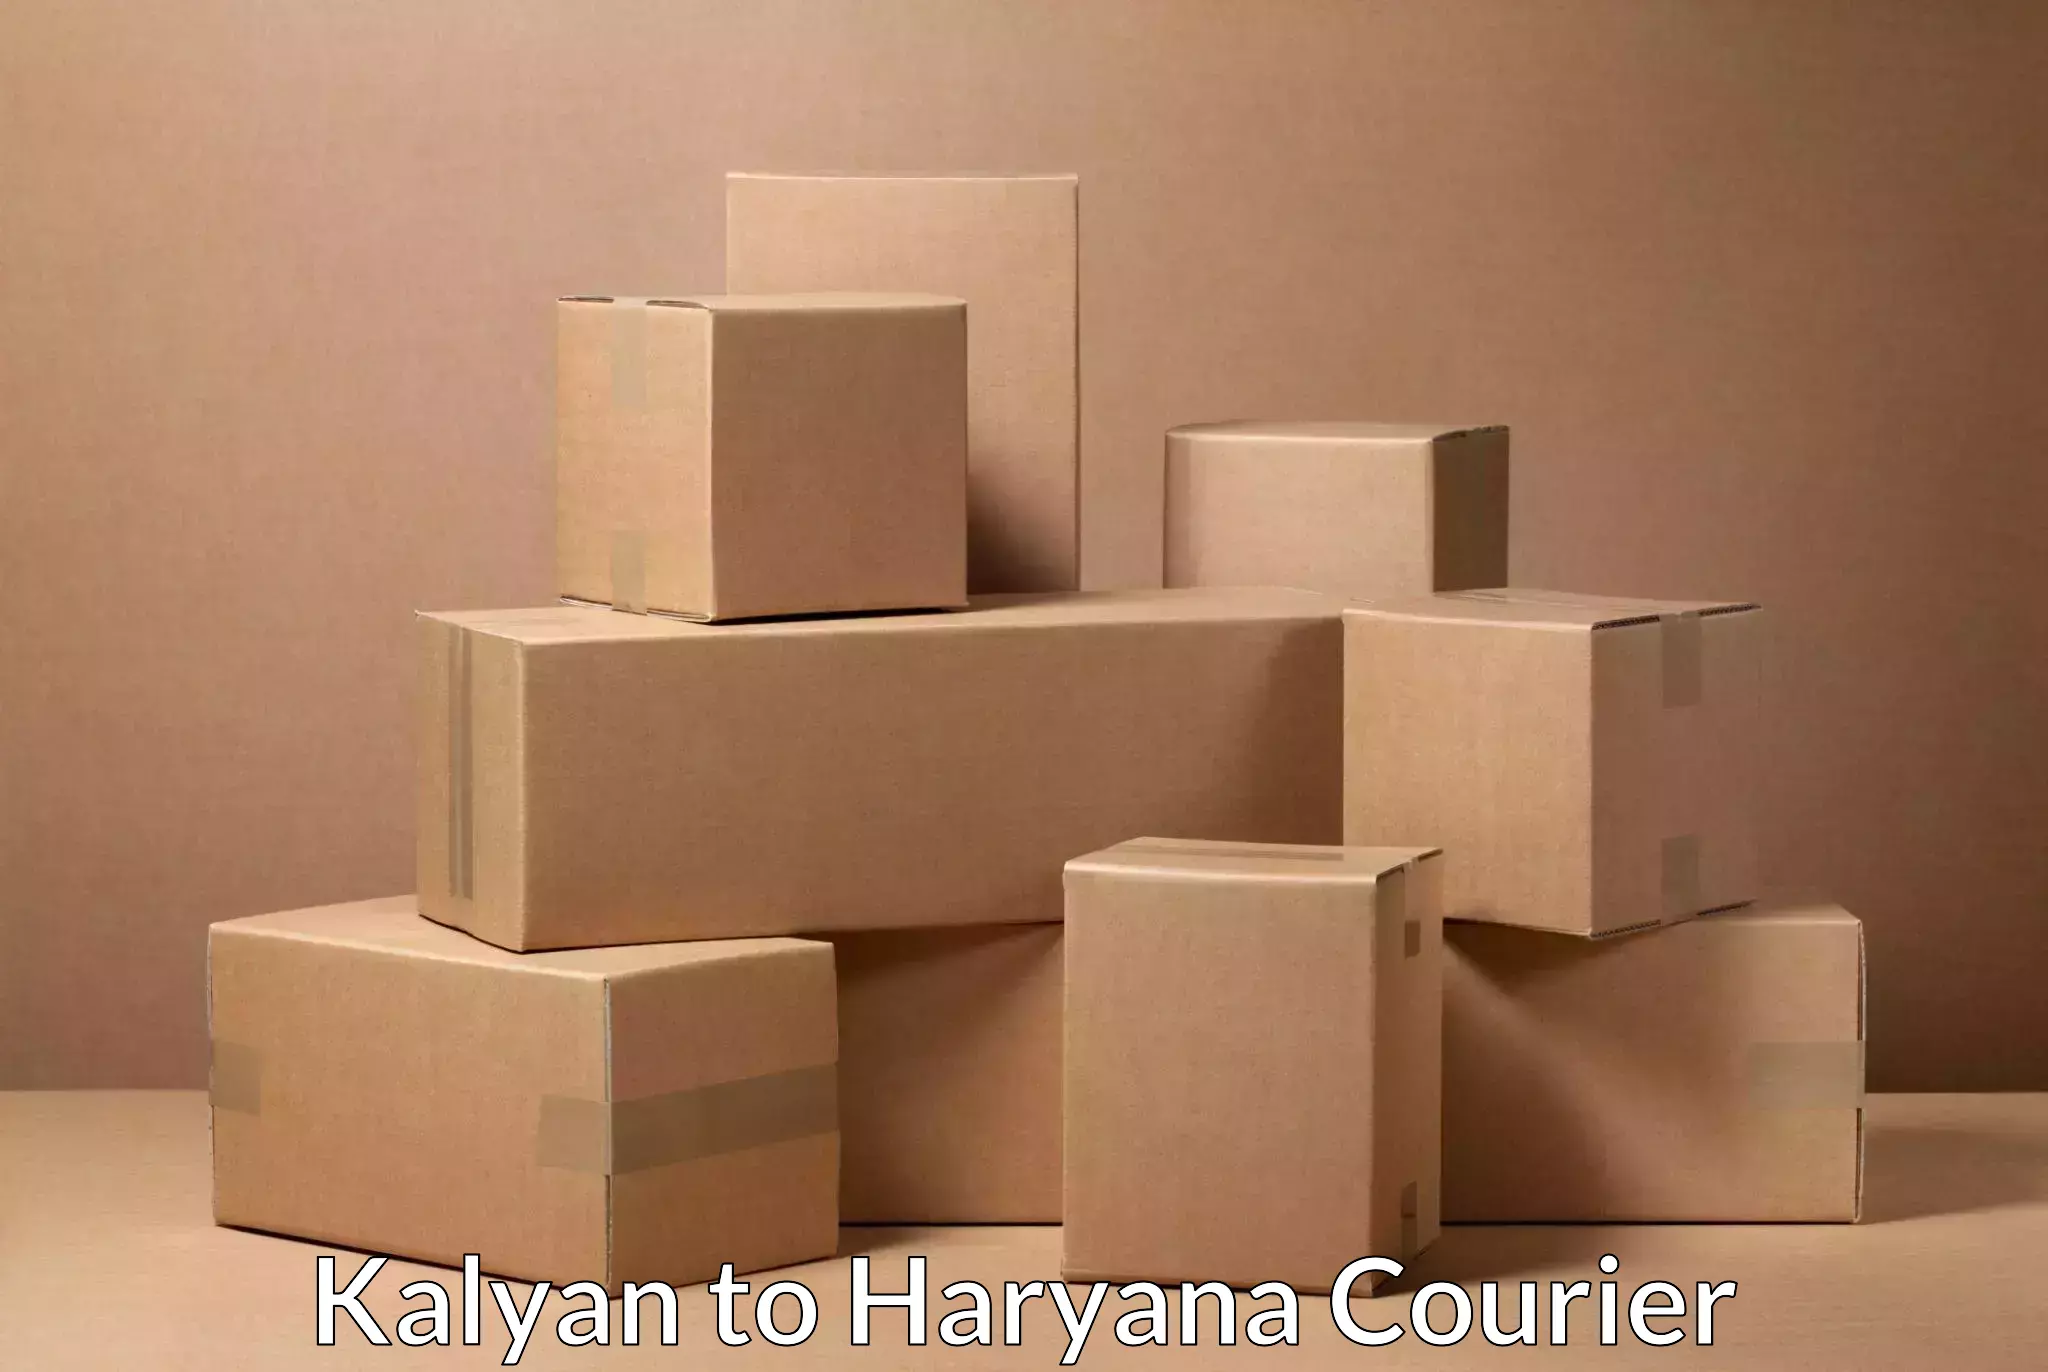 Cash on delivery service Kalyan to IIIT Sonepat